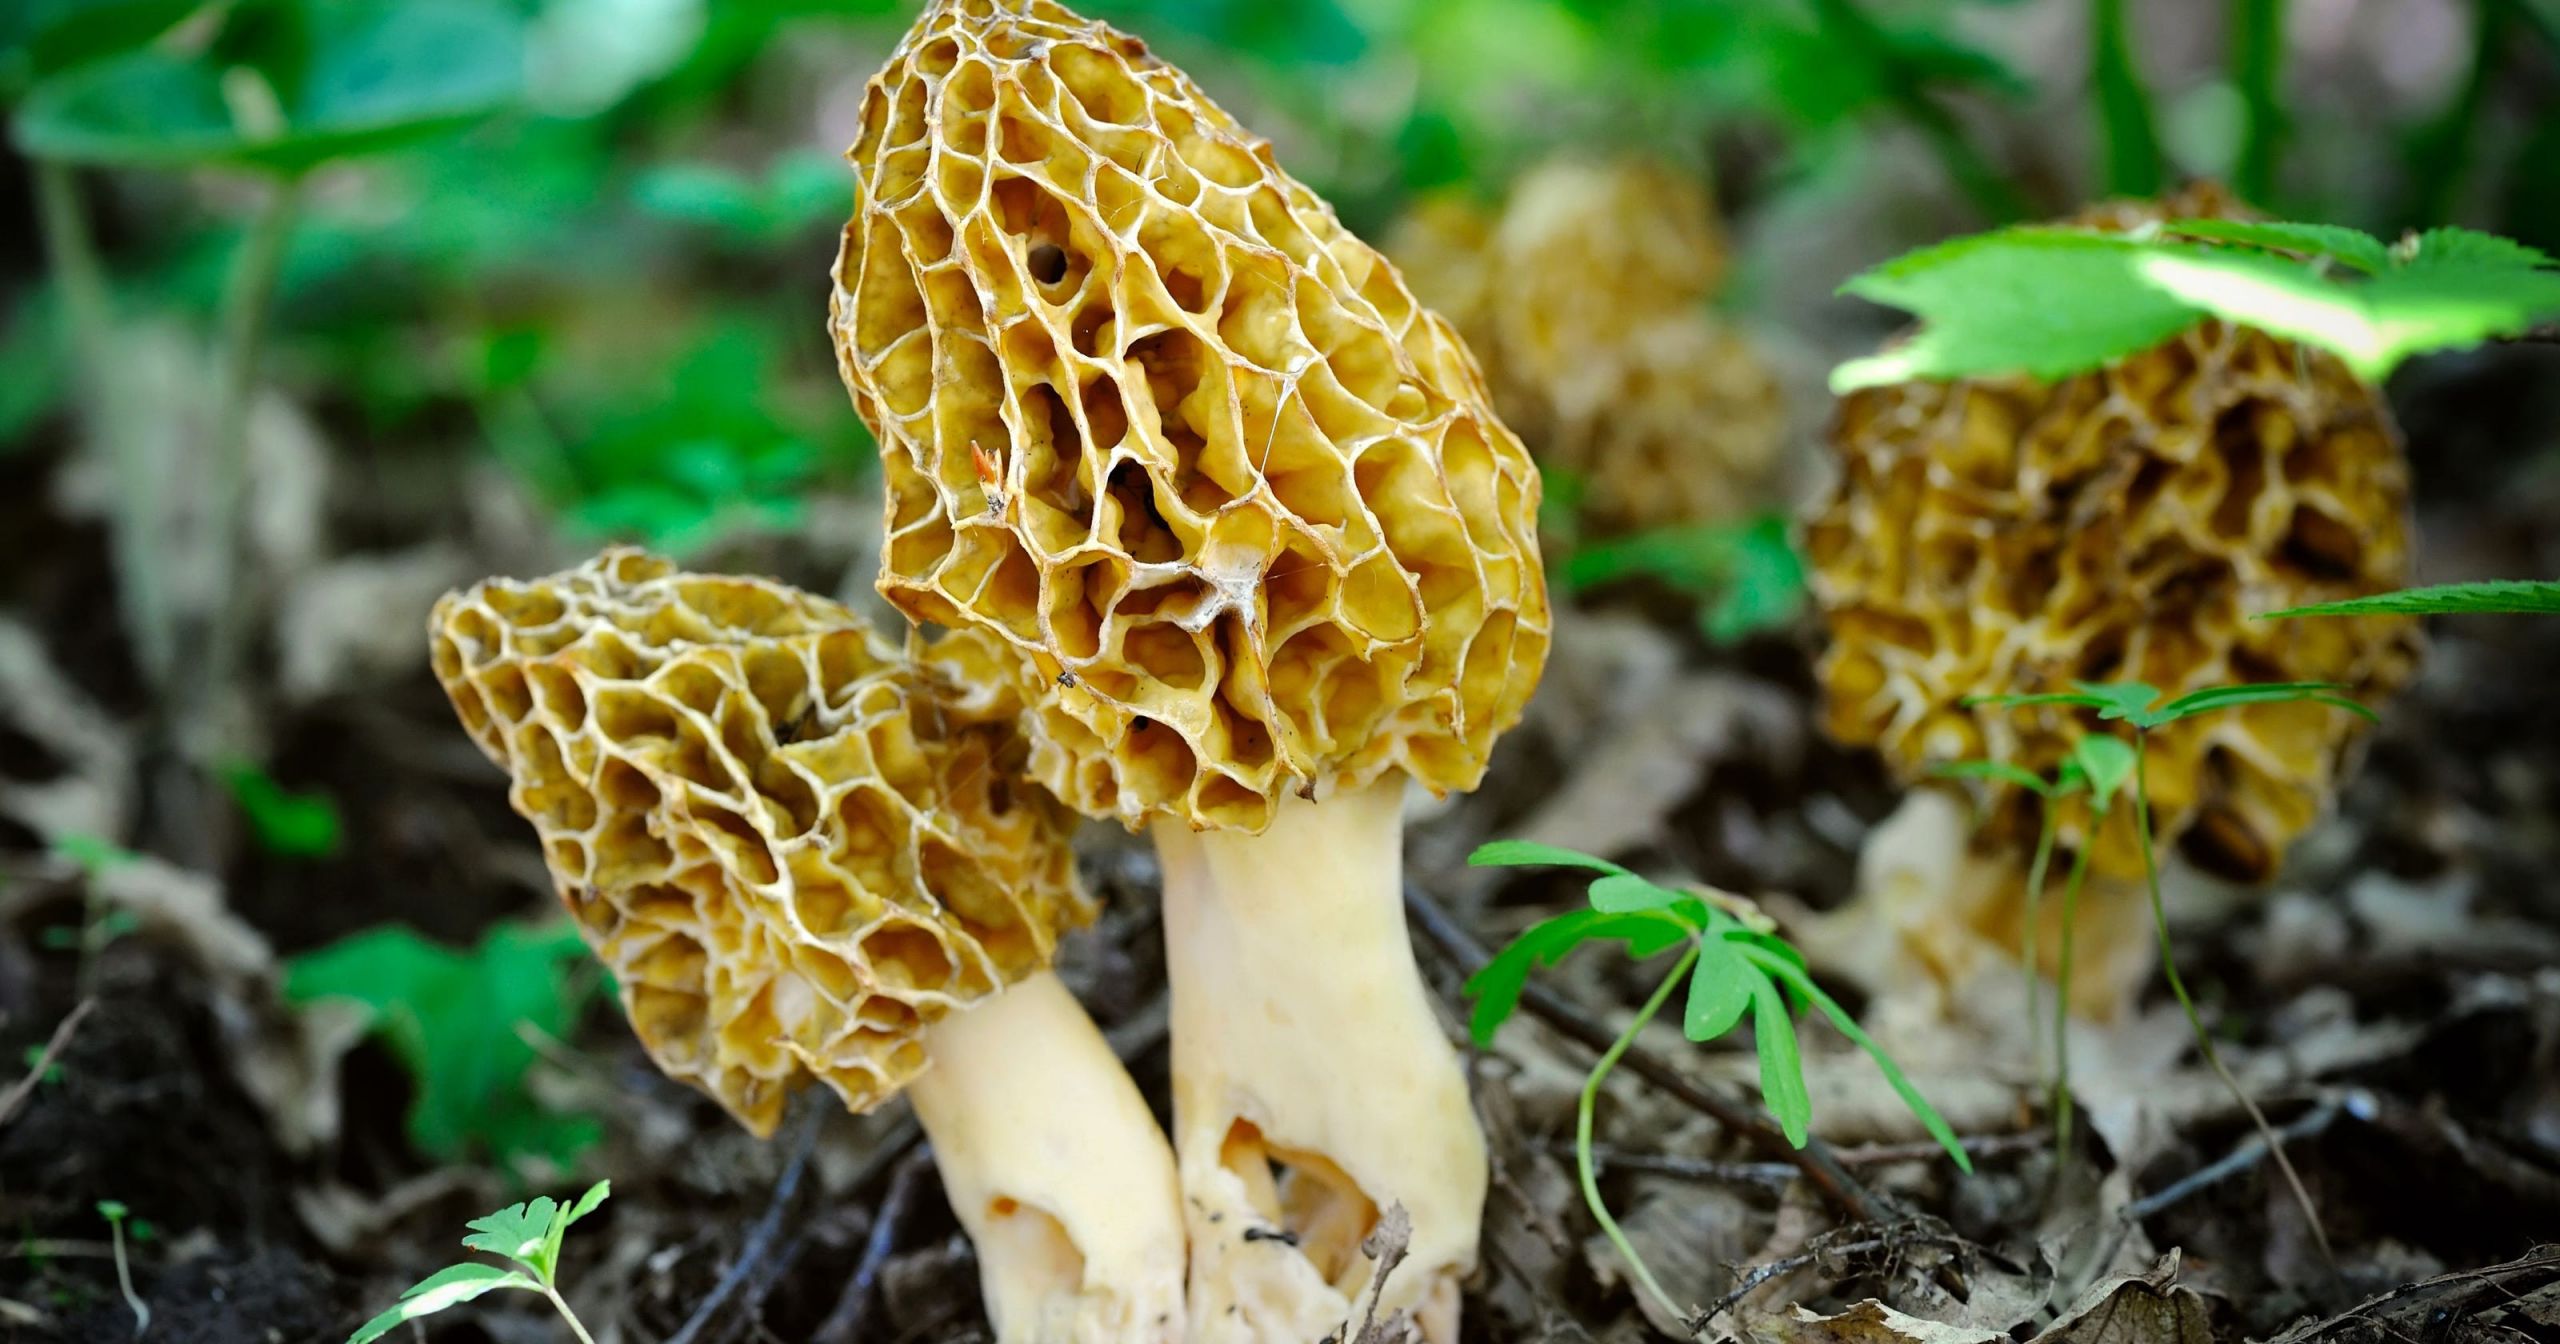 Photos Of Morel Mushrooms
 Tips for wrapping up morel mushroom season in Johnson County